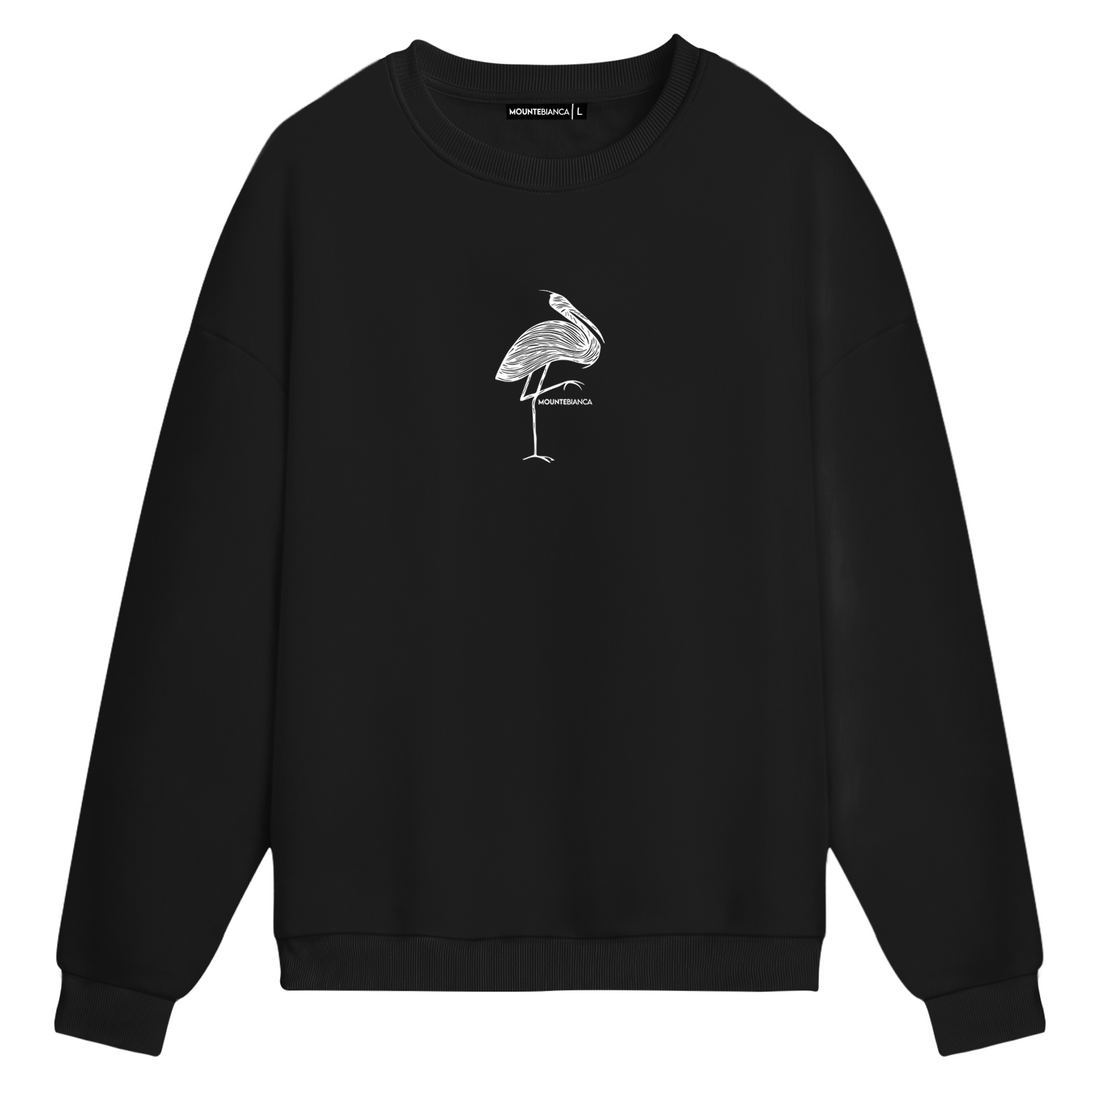 Stork - Sweatshirt